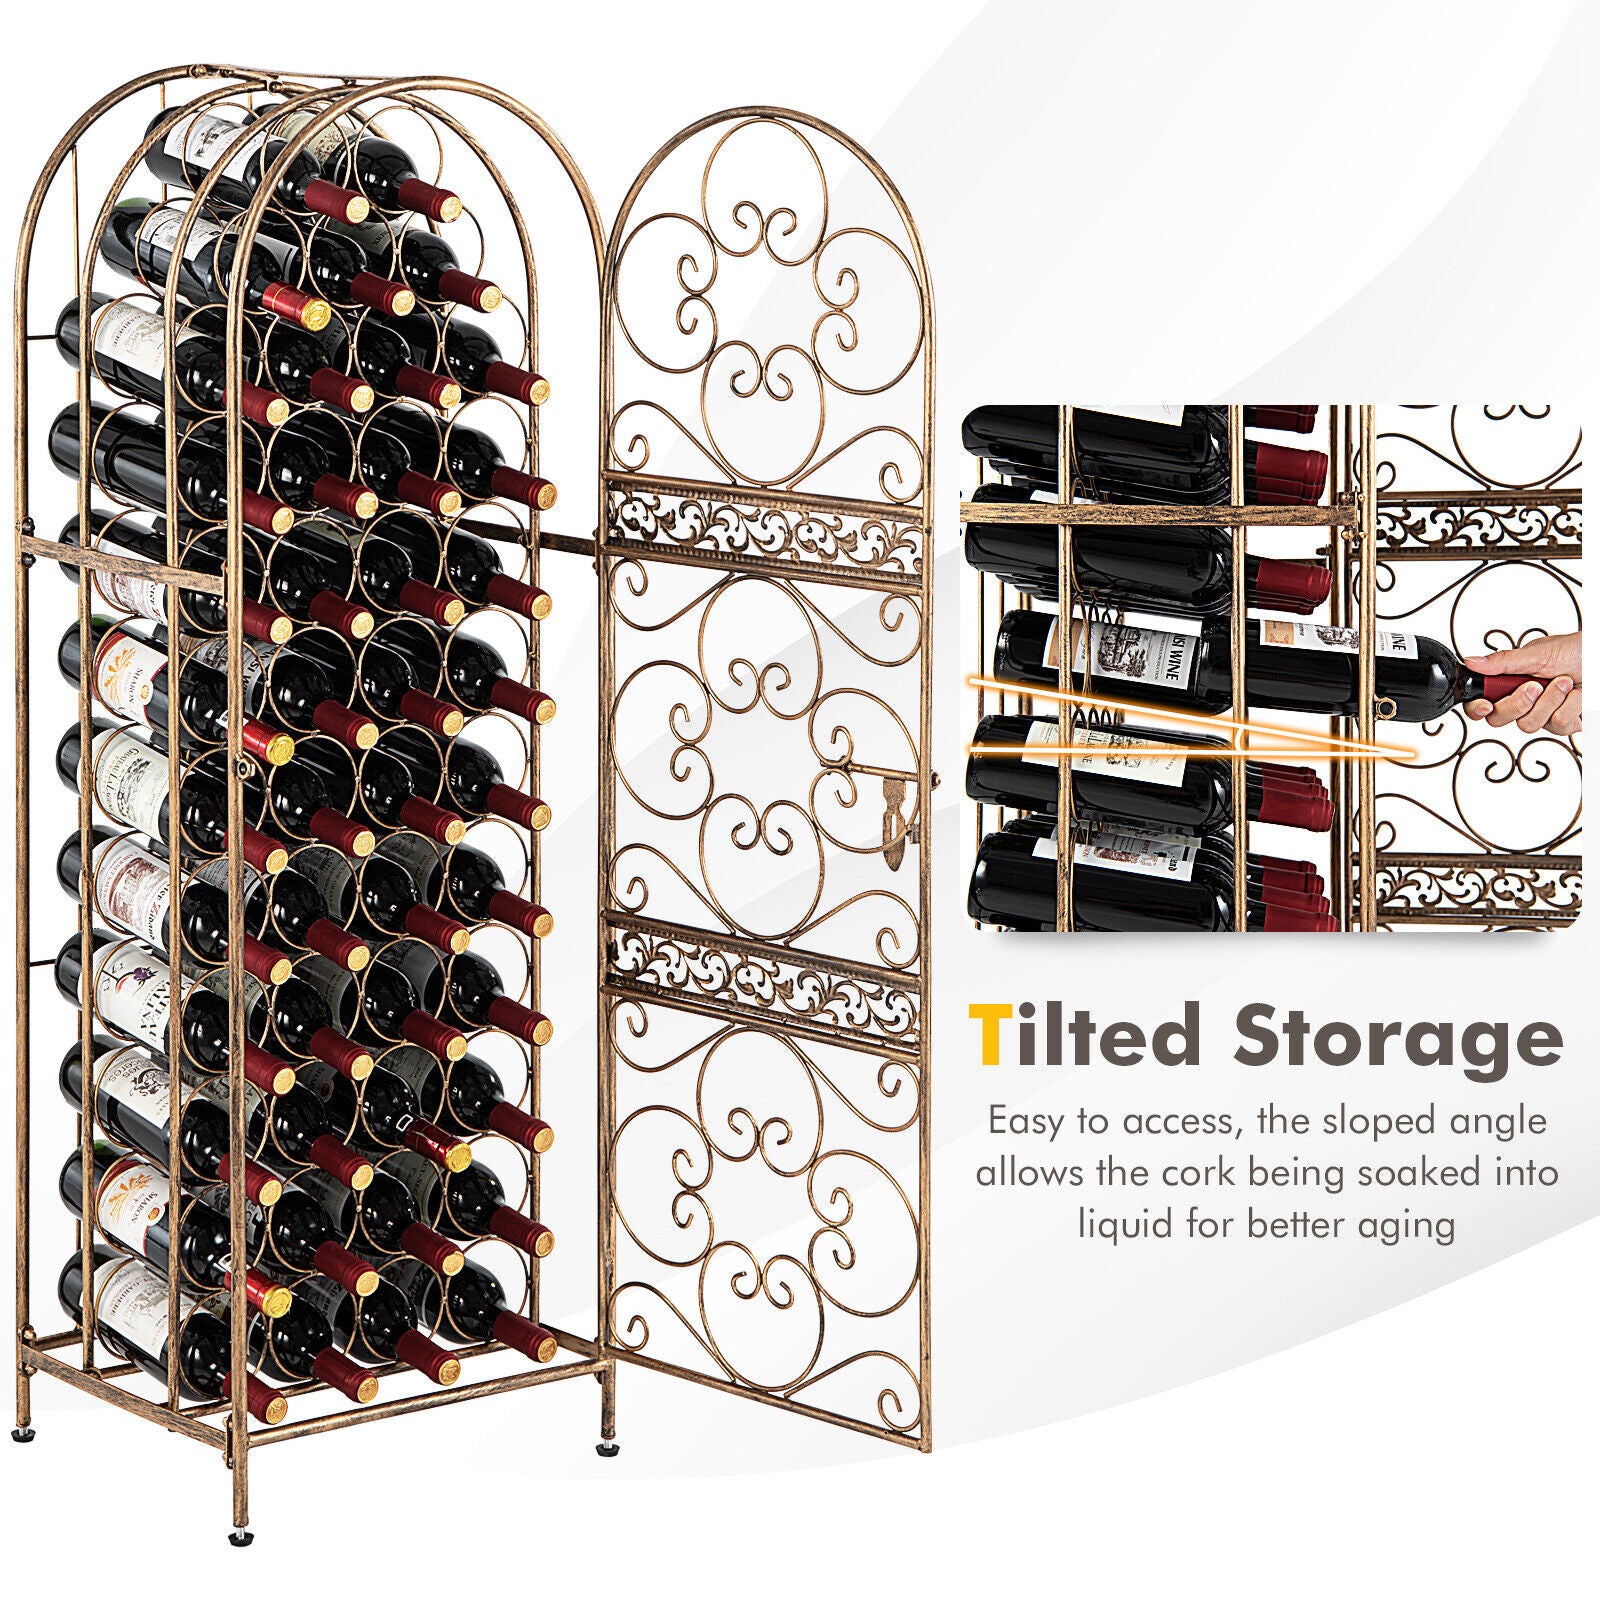 45-Bottle Golden Steel Wine Rack Arched Wine Storage Display Shelf Holder